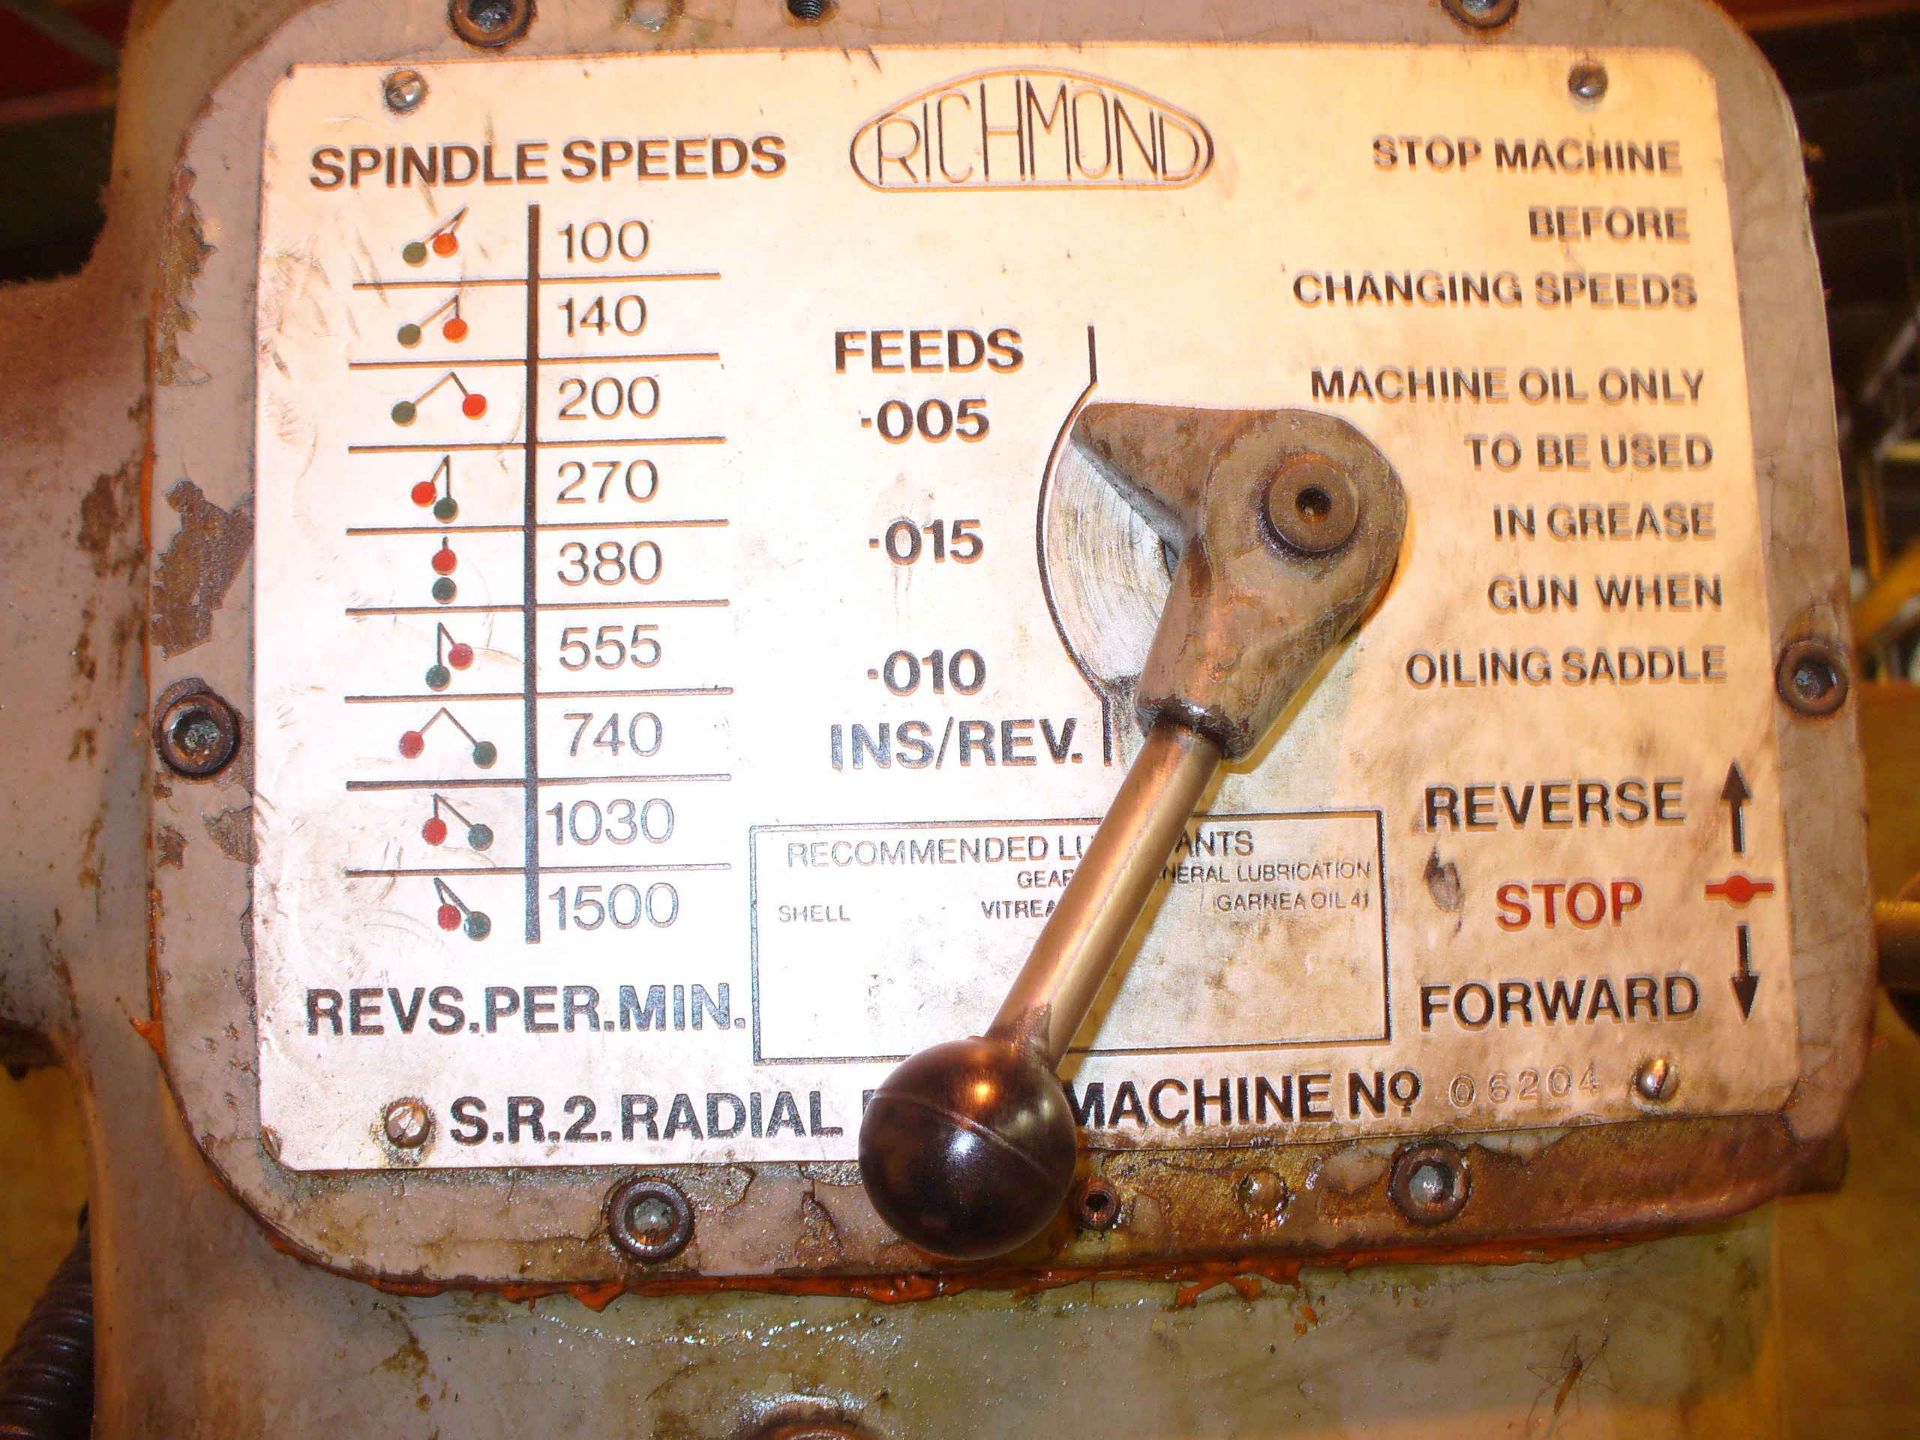 Richmond SR2 RADIAL ARM DRILL - 100/1500rpm, serial no 06204 - Image 2 of 4